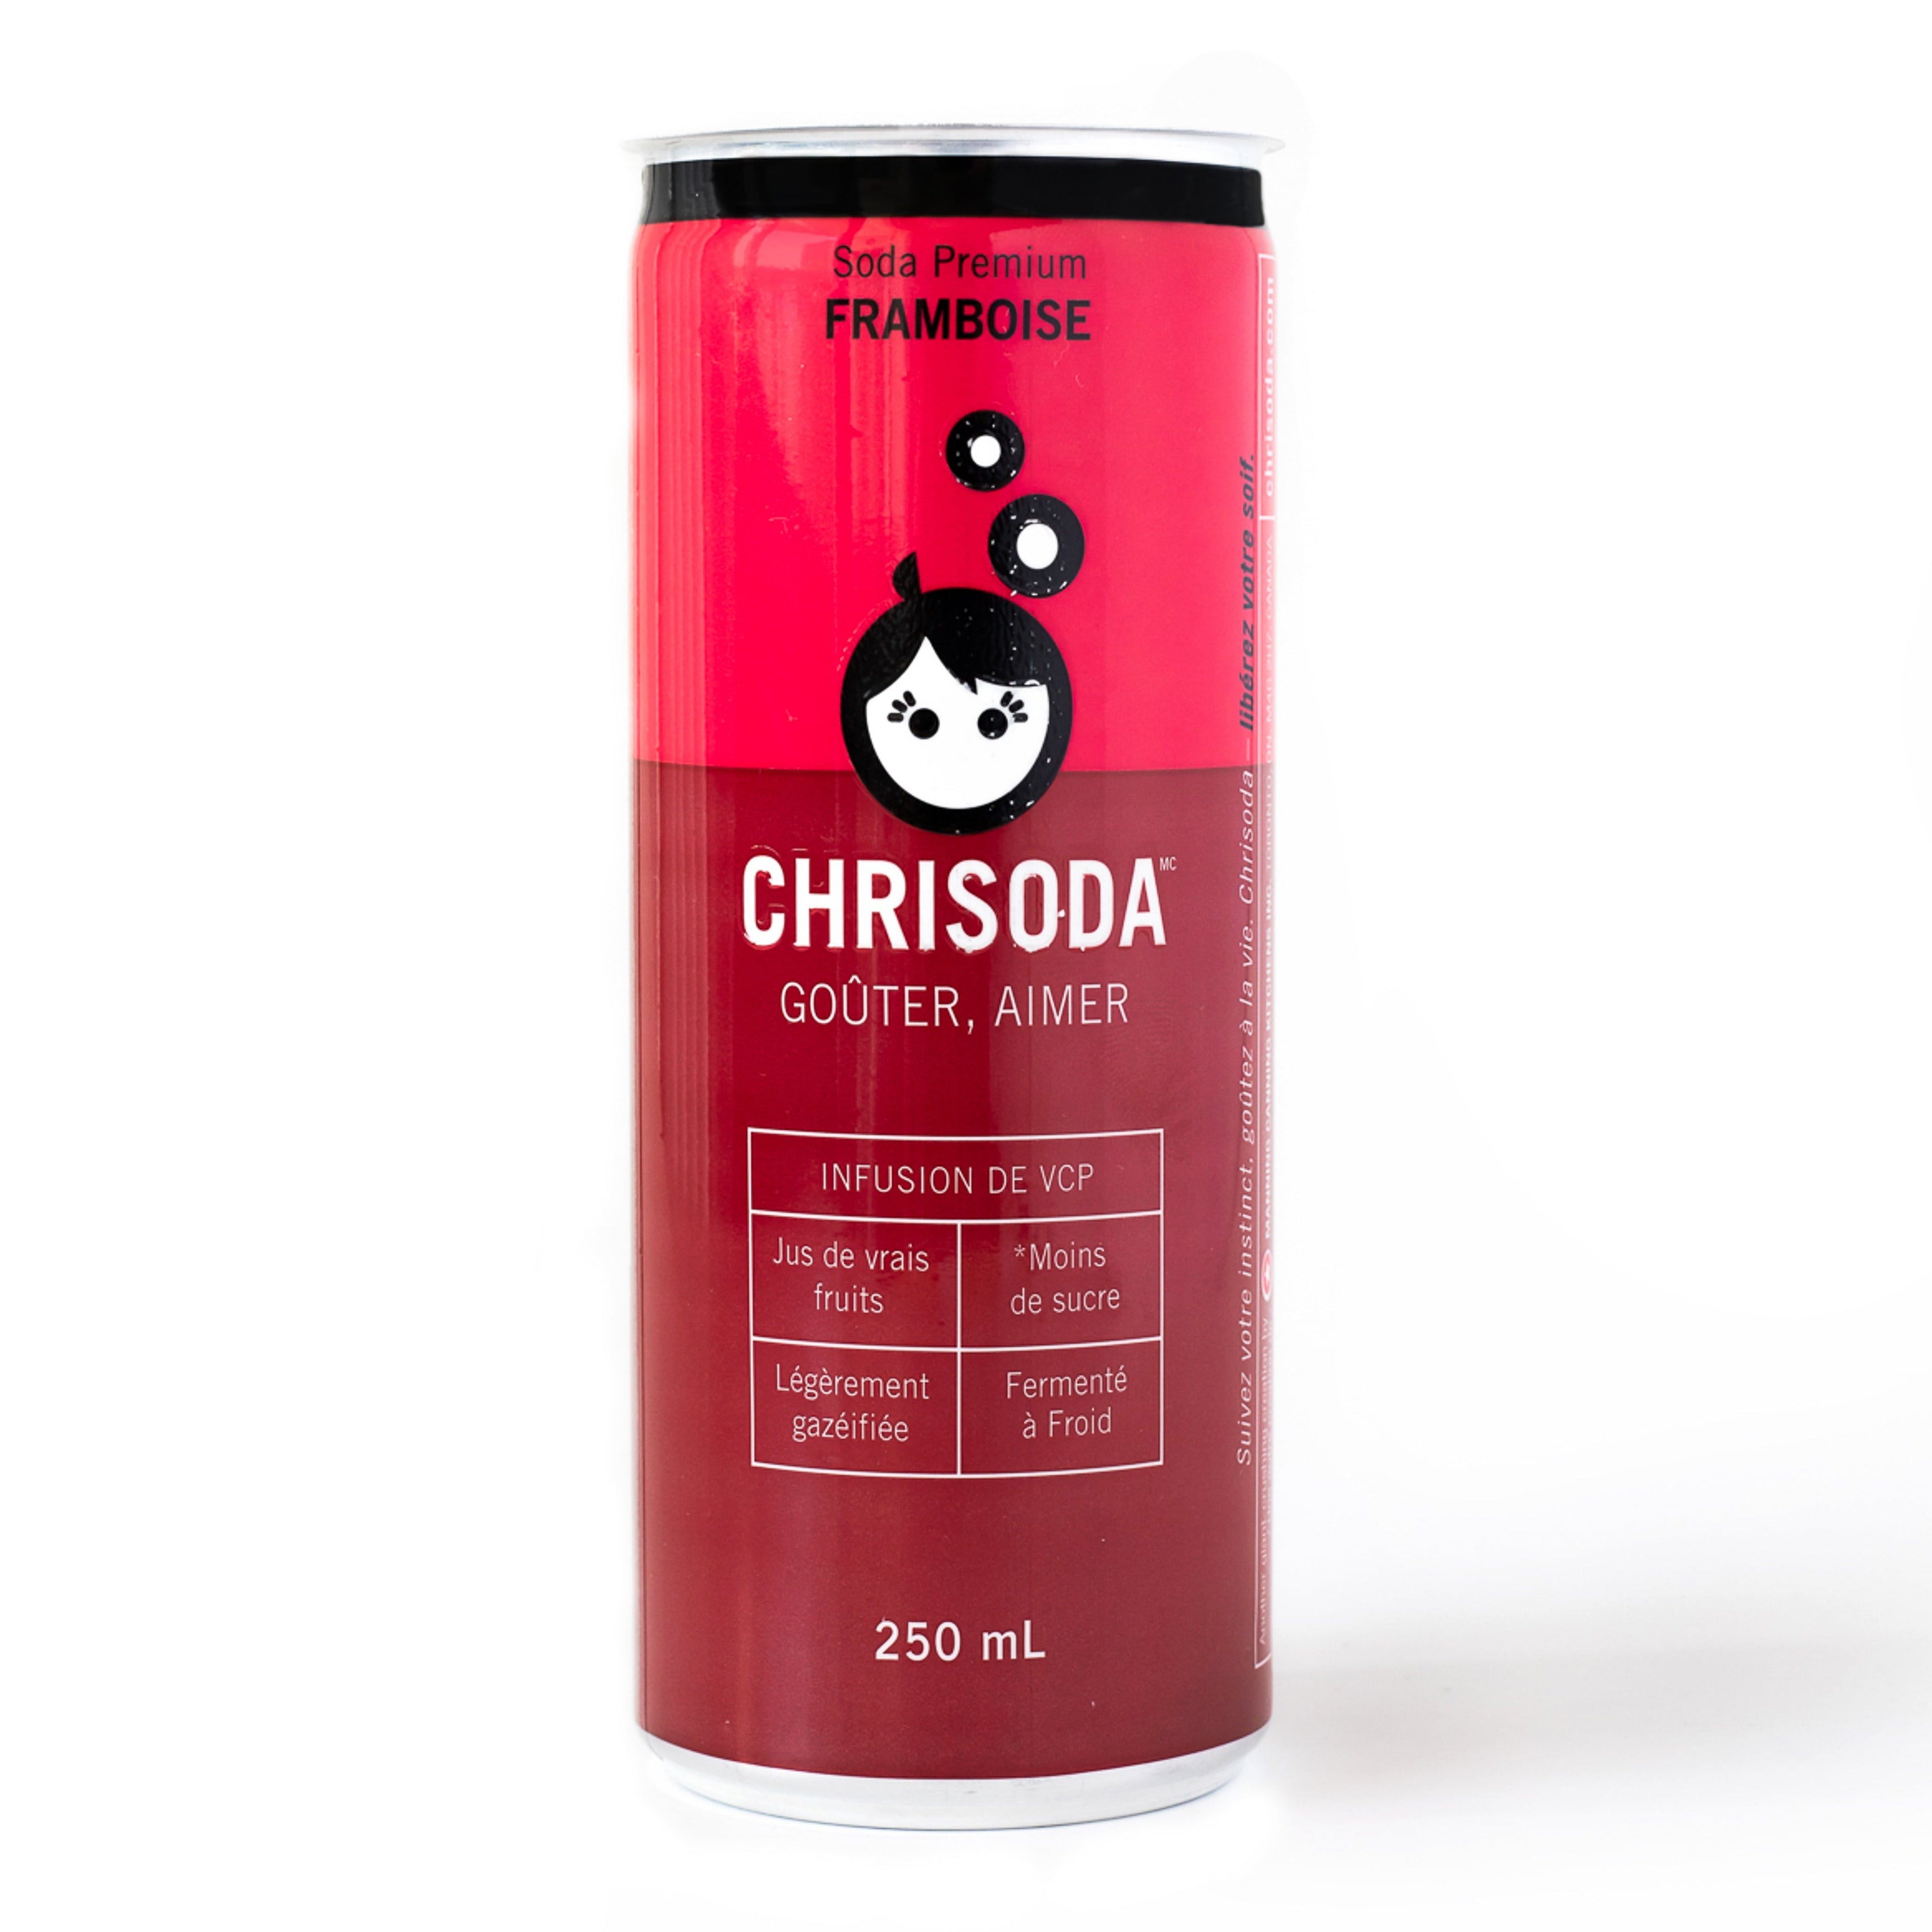 can of raspberry chrisoda